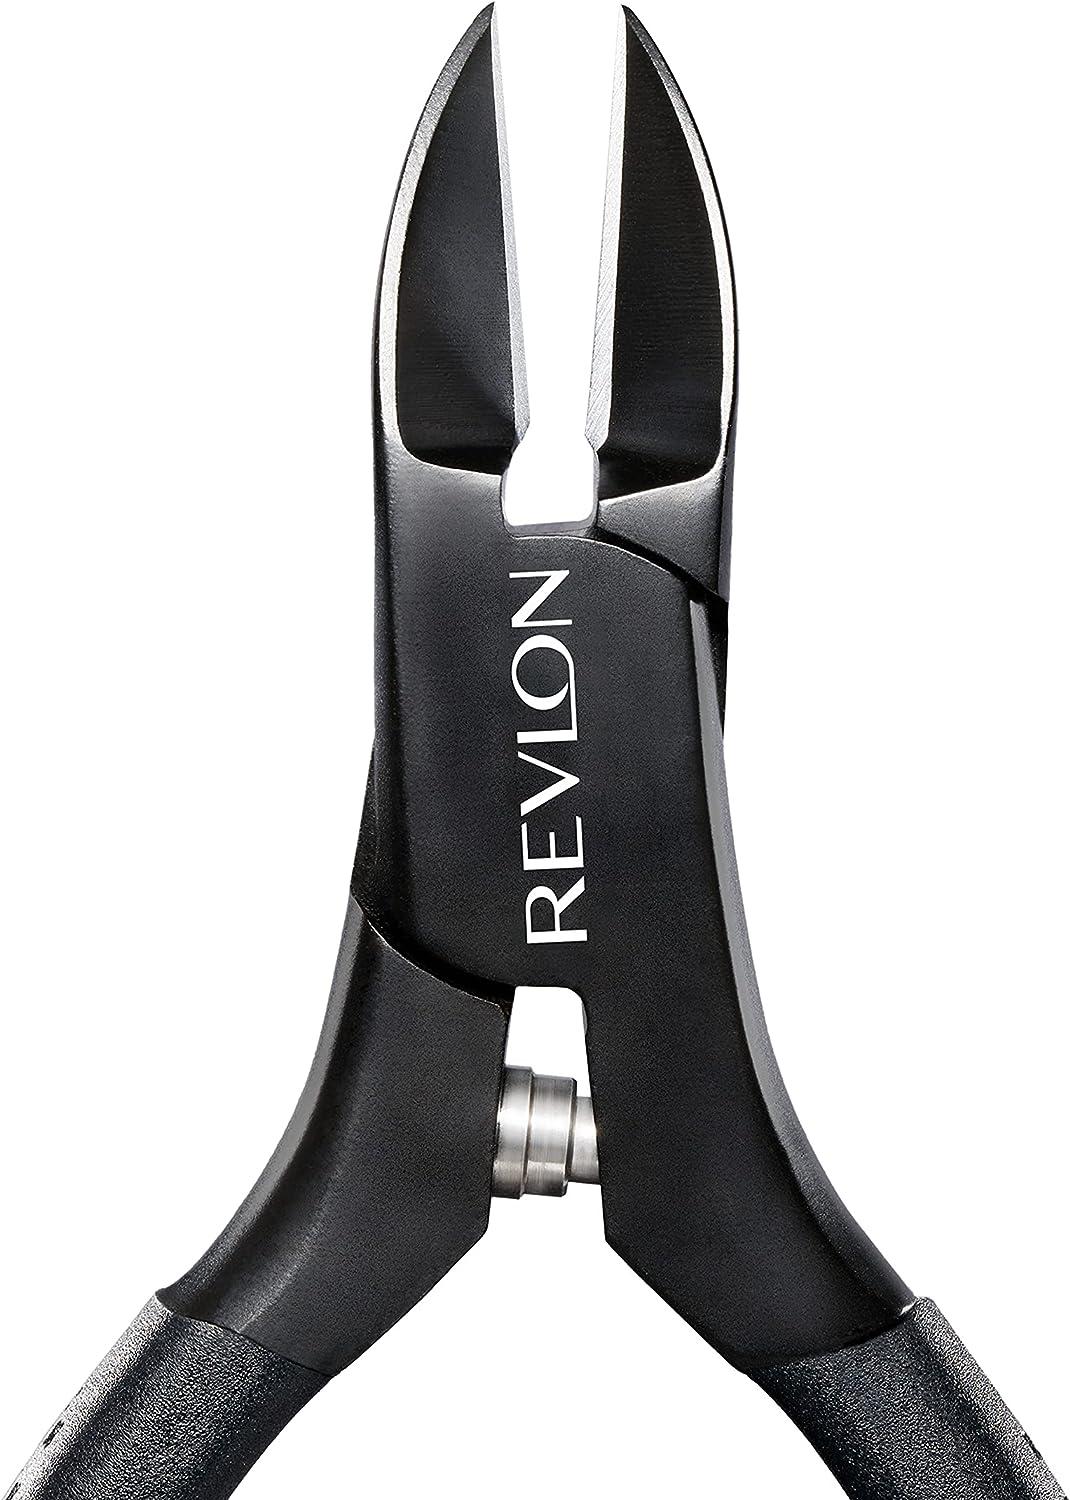  Revlon Revlon Comfort and Control Tweezer, Easy to